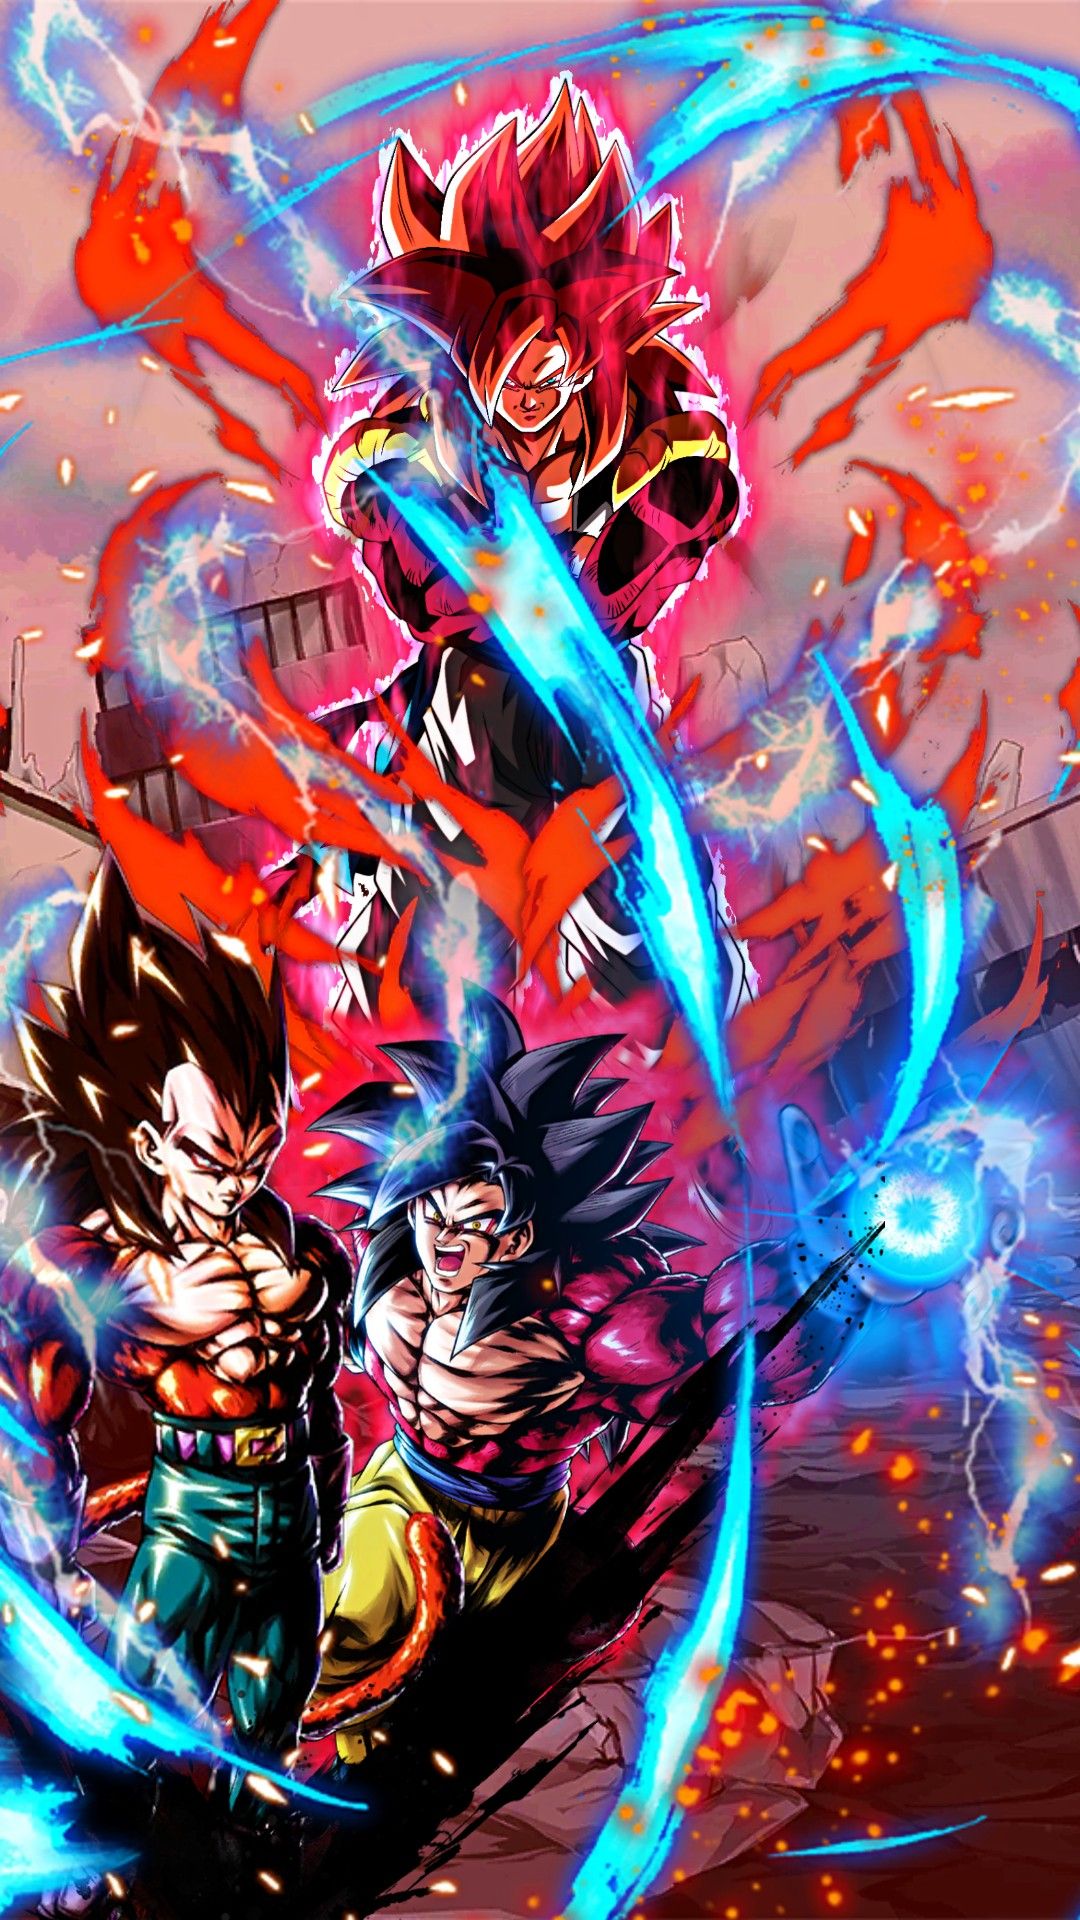 Vegeta VS Goku from Dragon Ball Super Anime Wallpaper ID4990